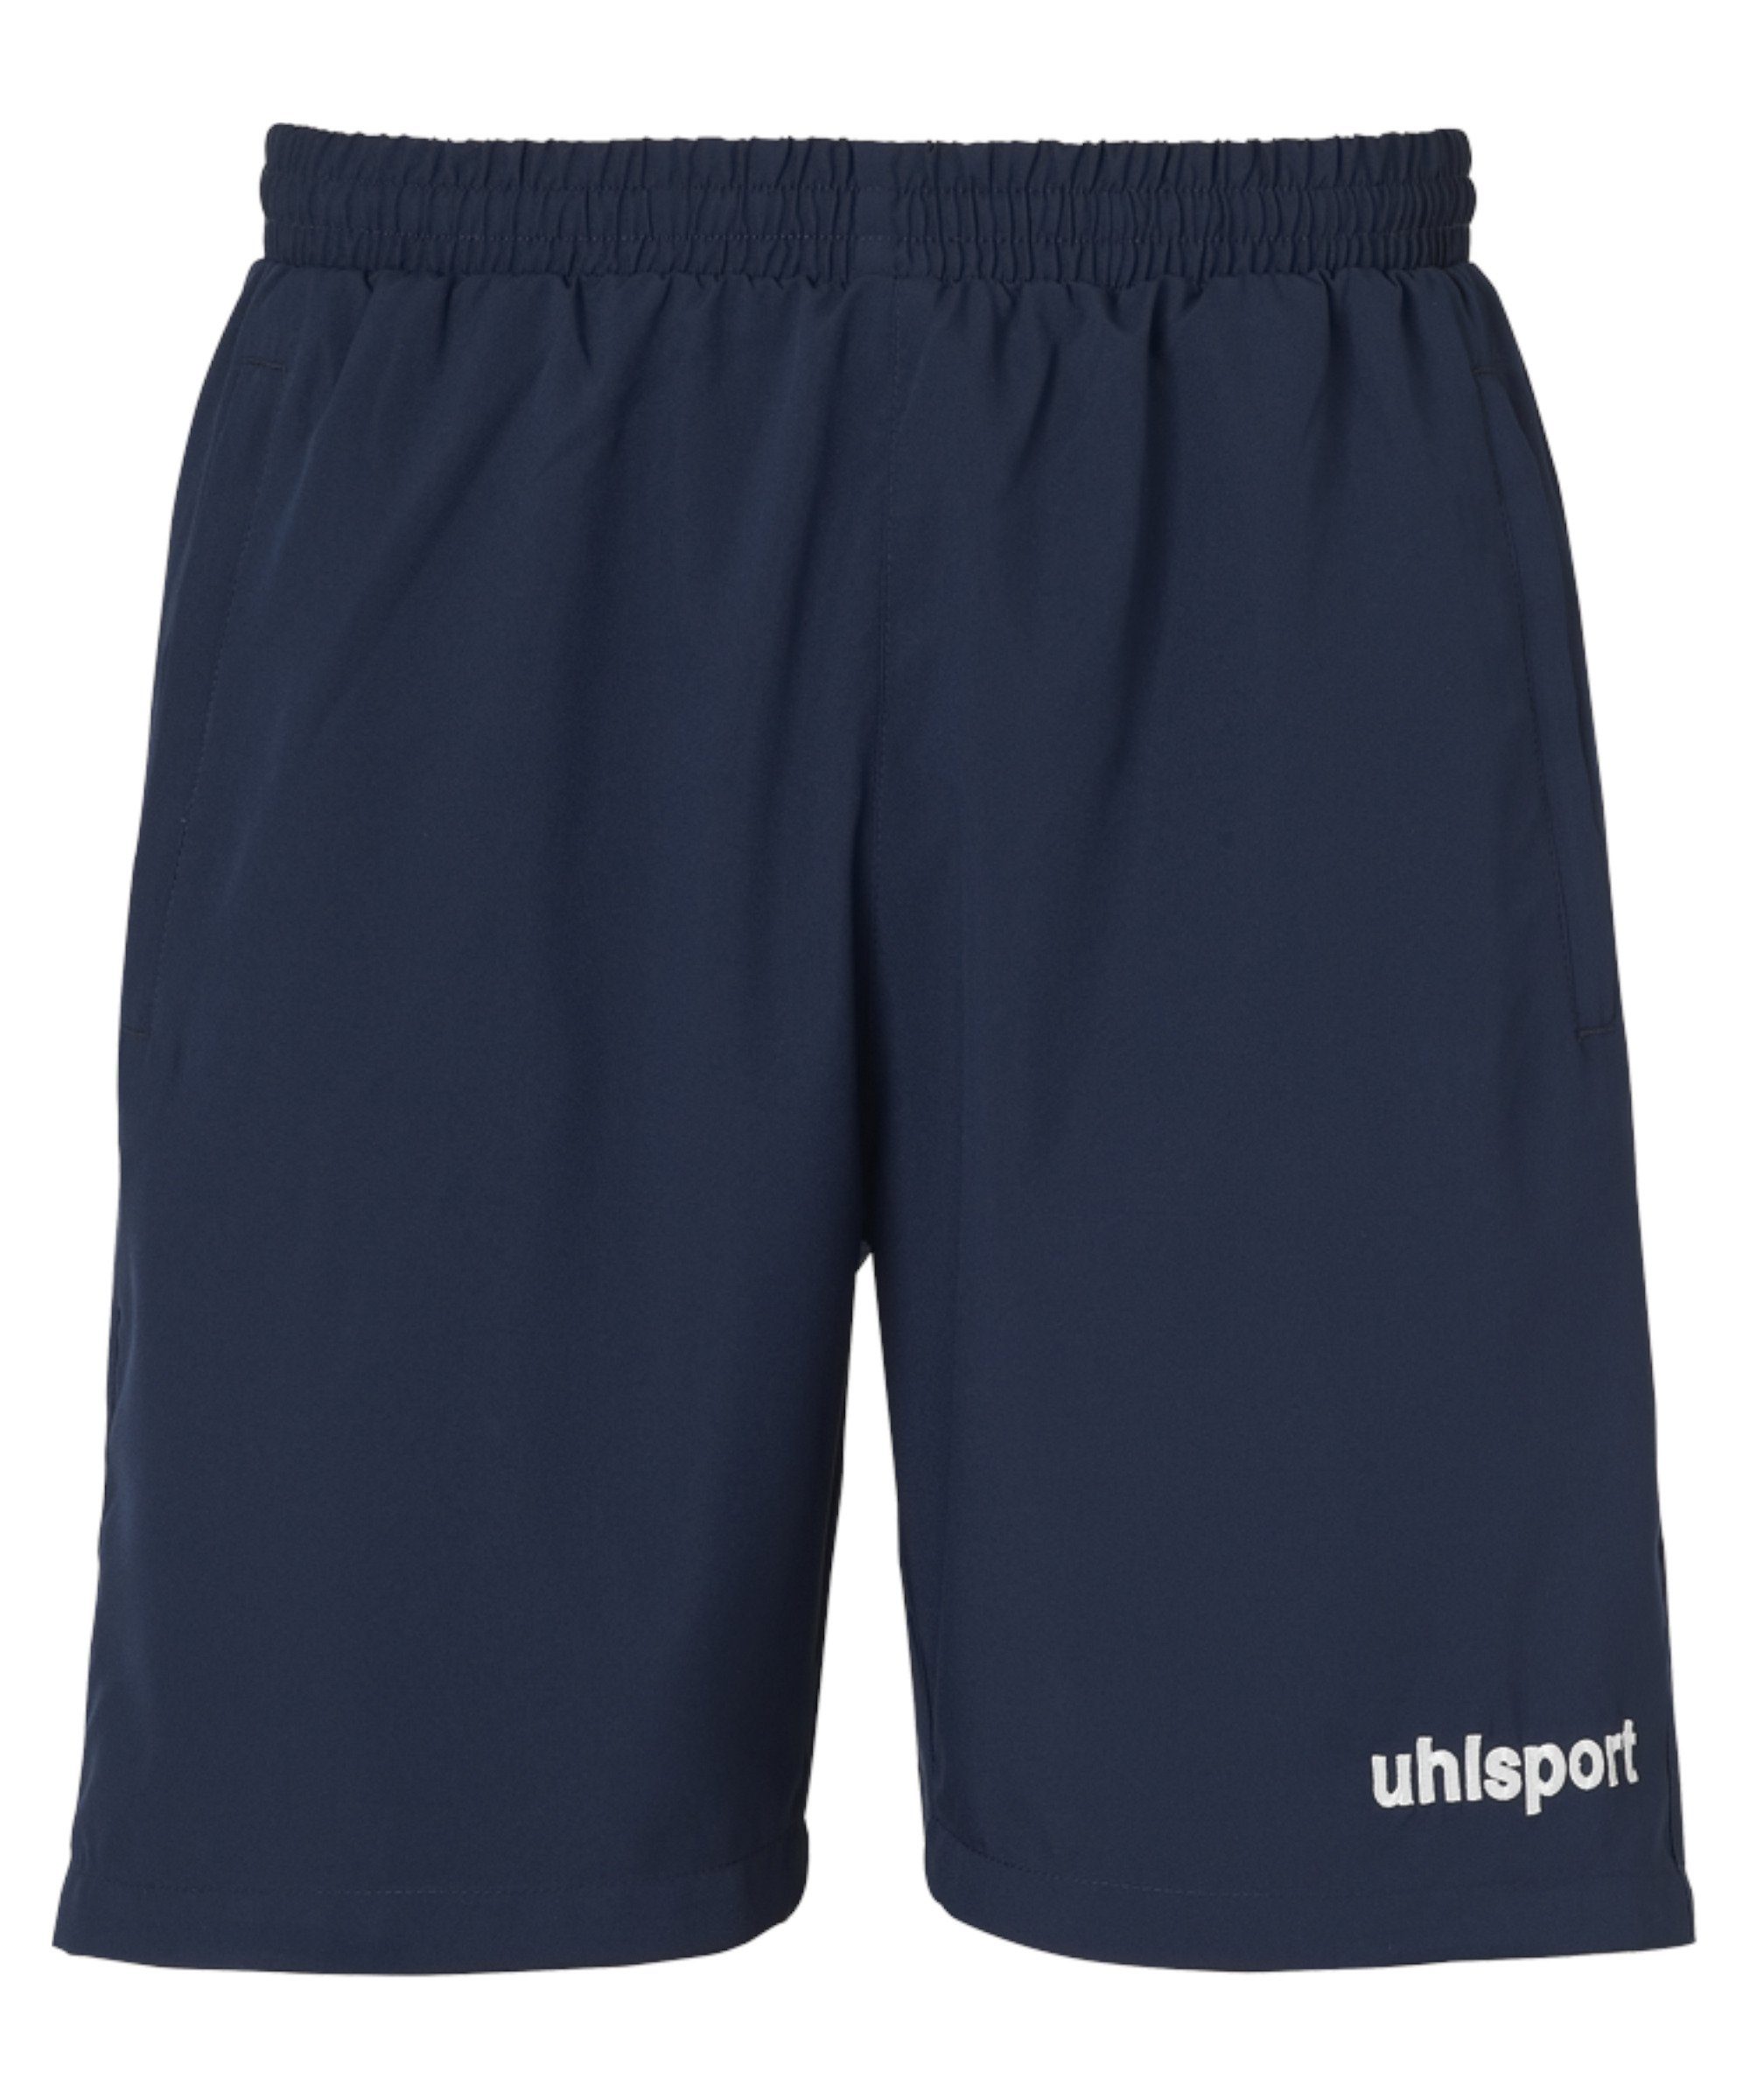 uhlsport Sporthose Essential Webshorts blau